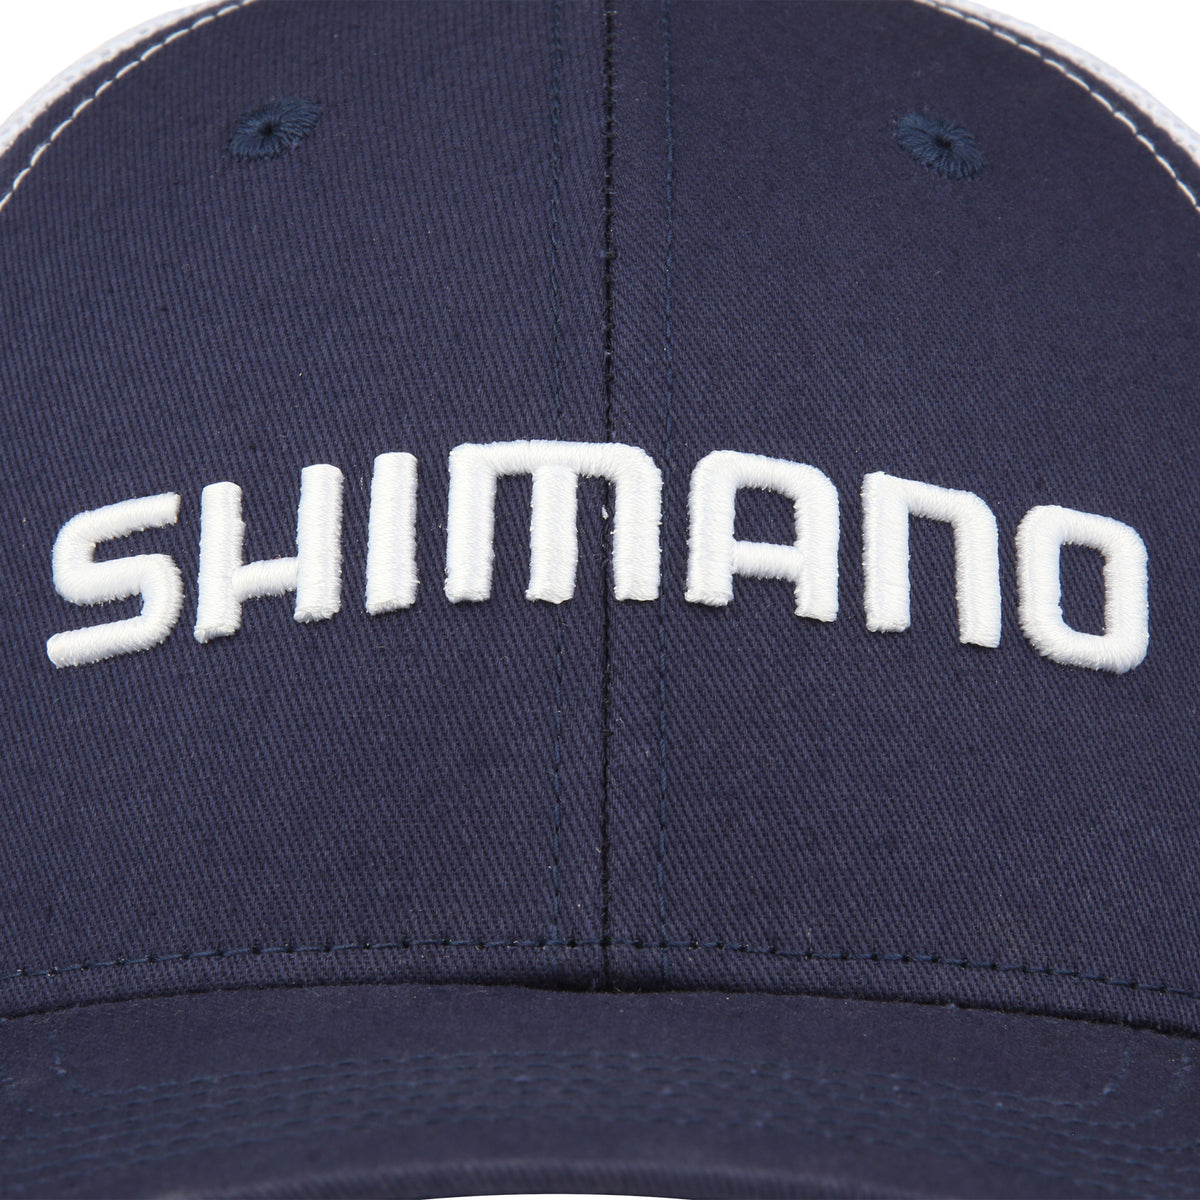 SHIMANO FISHING BRAND LOGO FULL CAP HAT TOPI, Men's Fashion